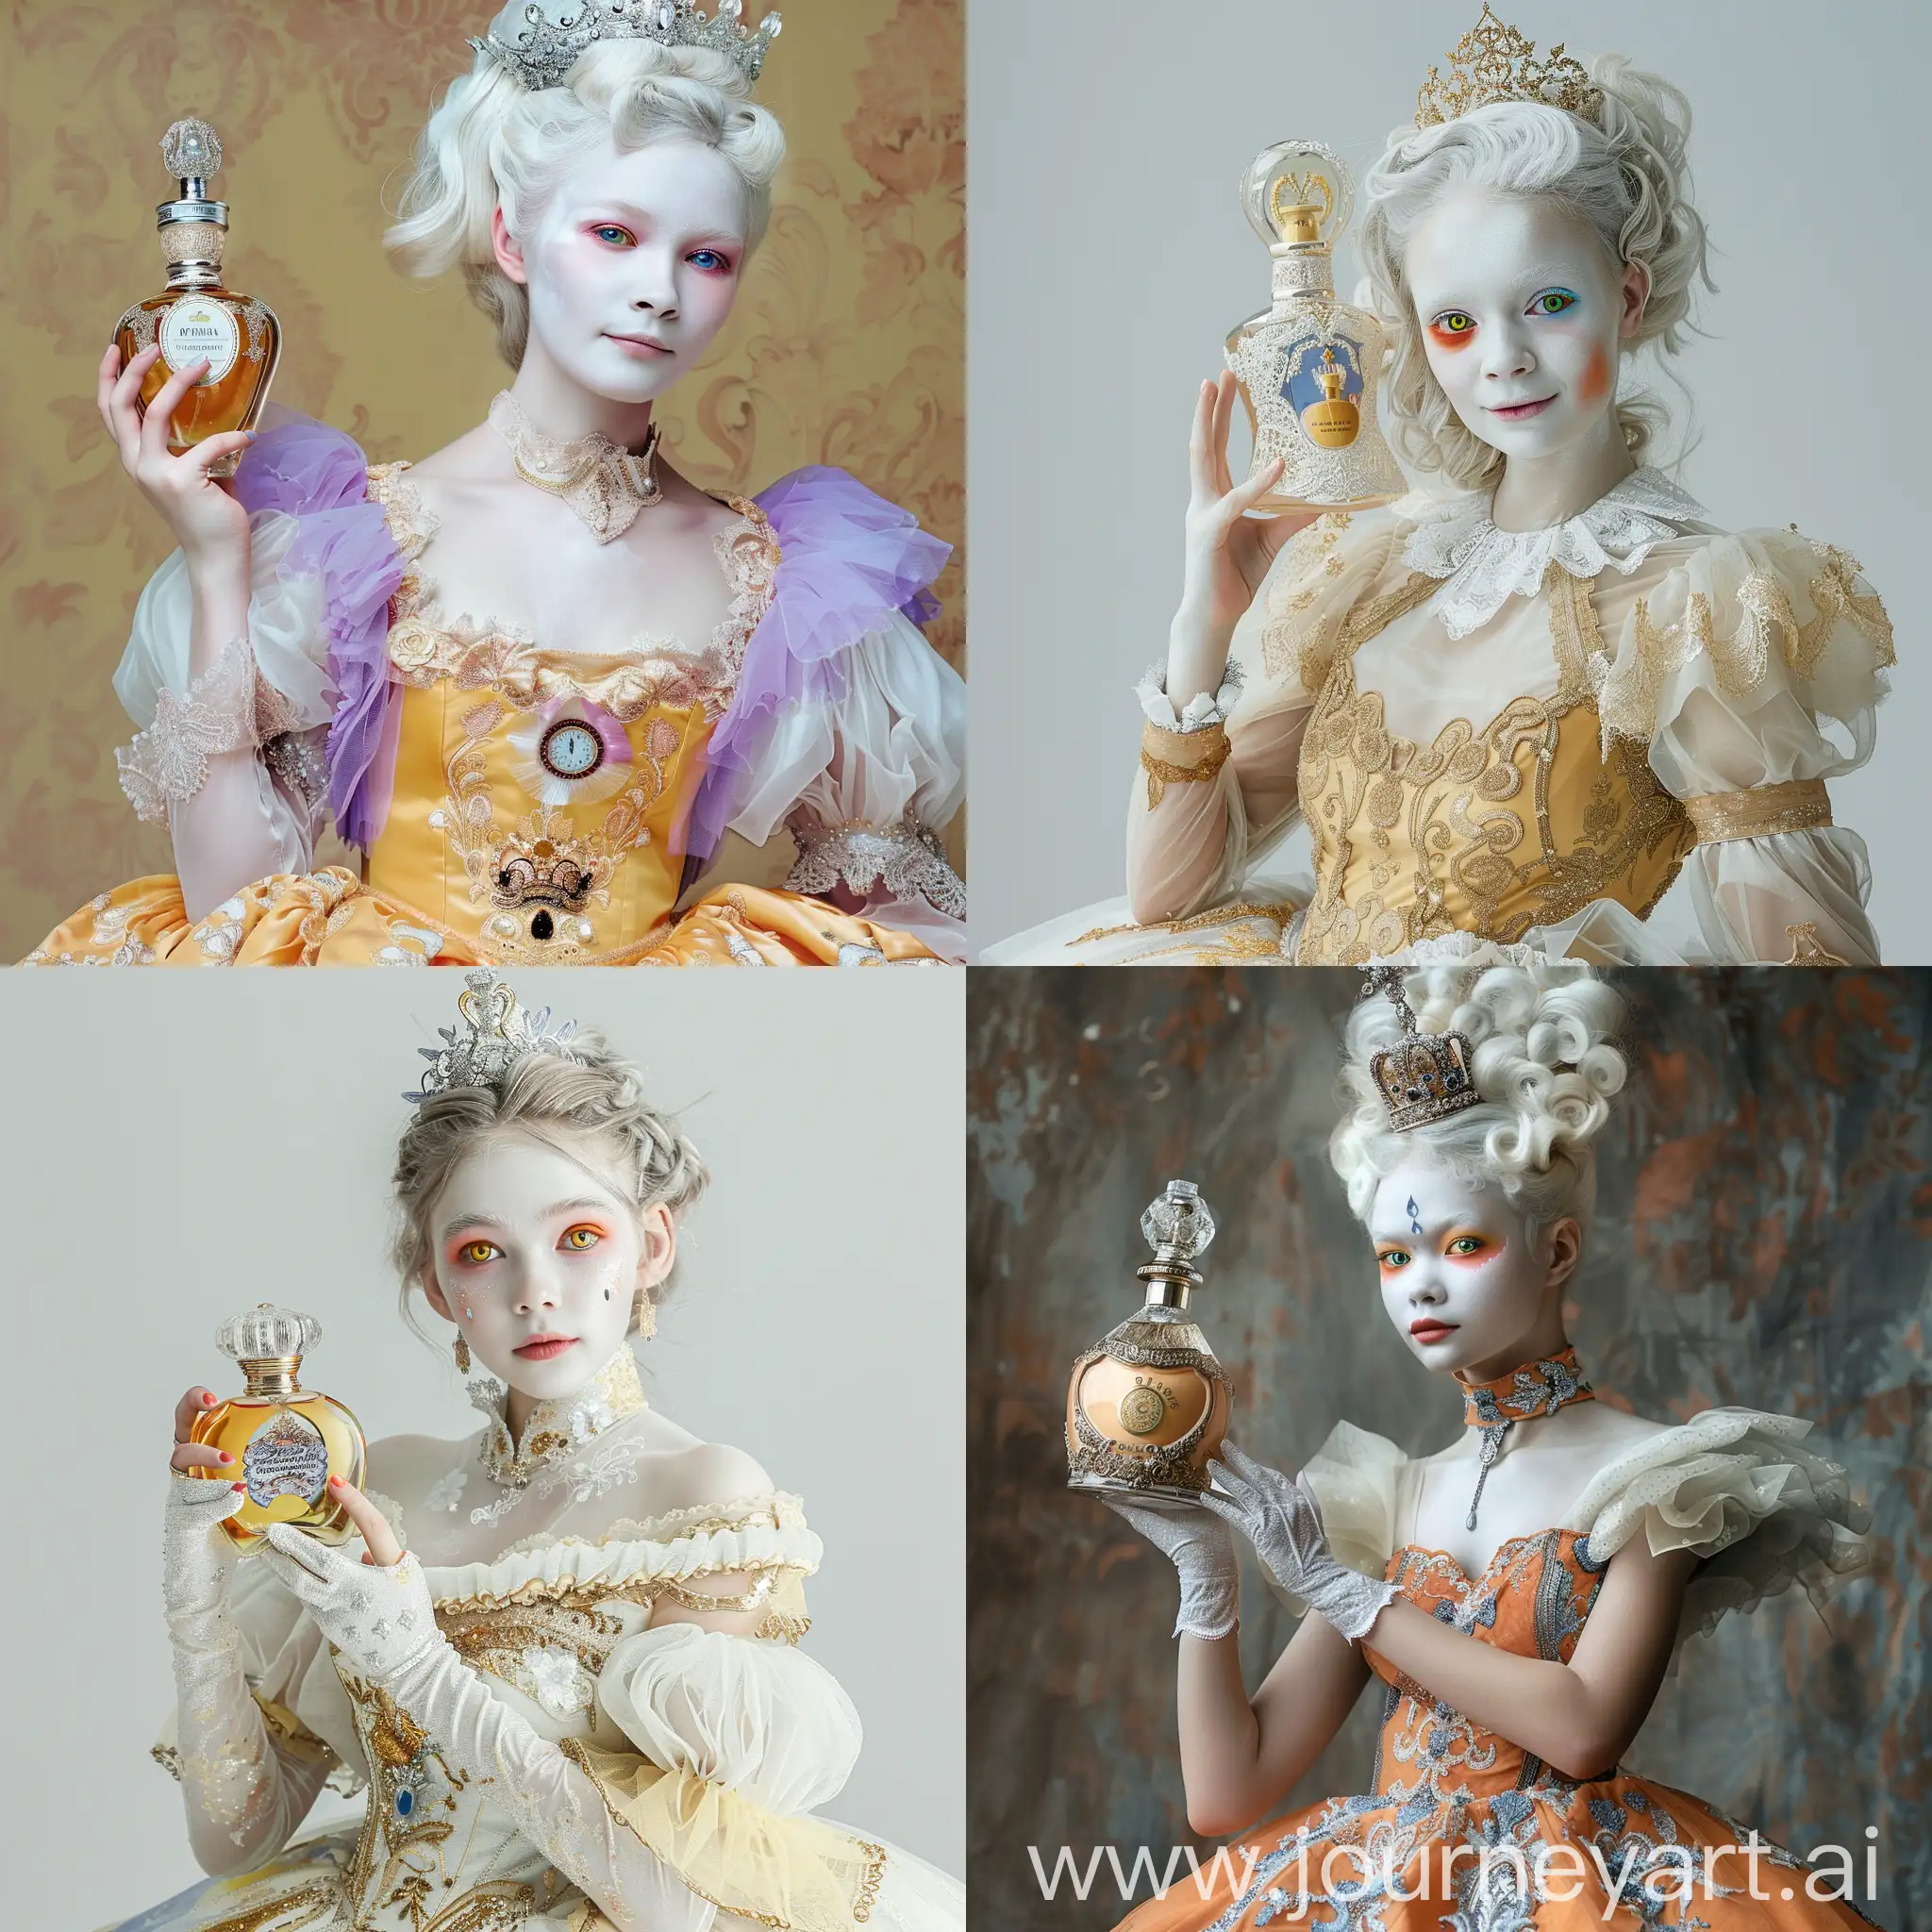 Elegant-Princess-Perfume-Ad-featuring-a-Stunning-20YearOld